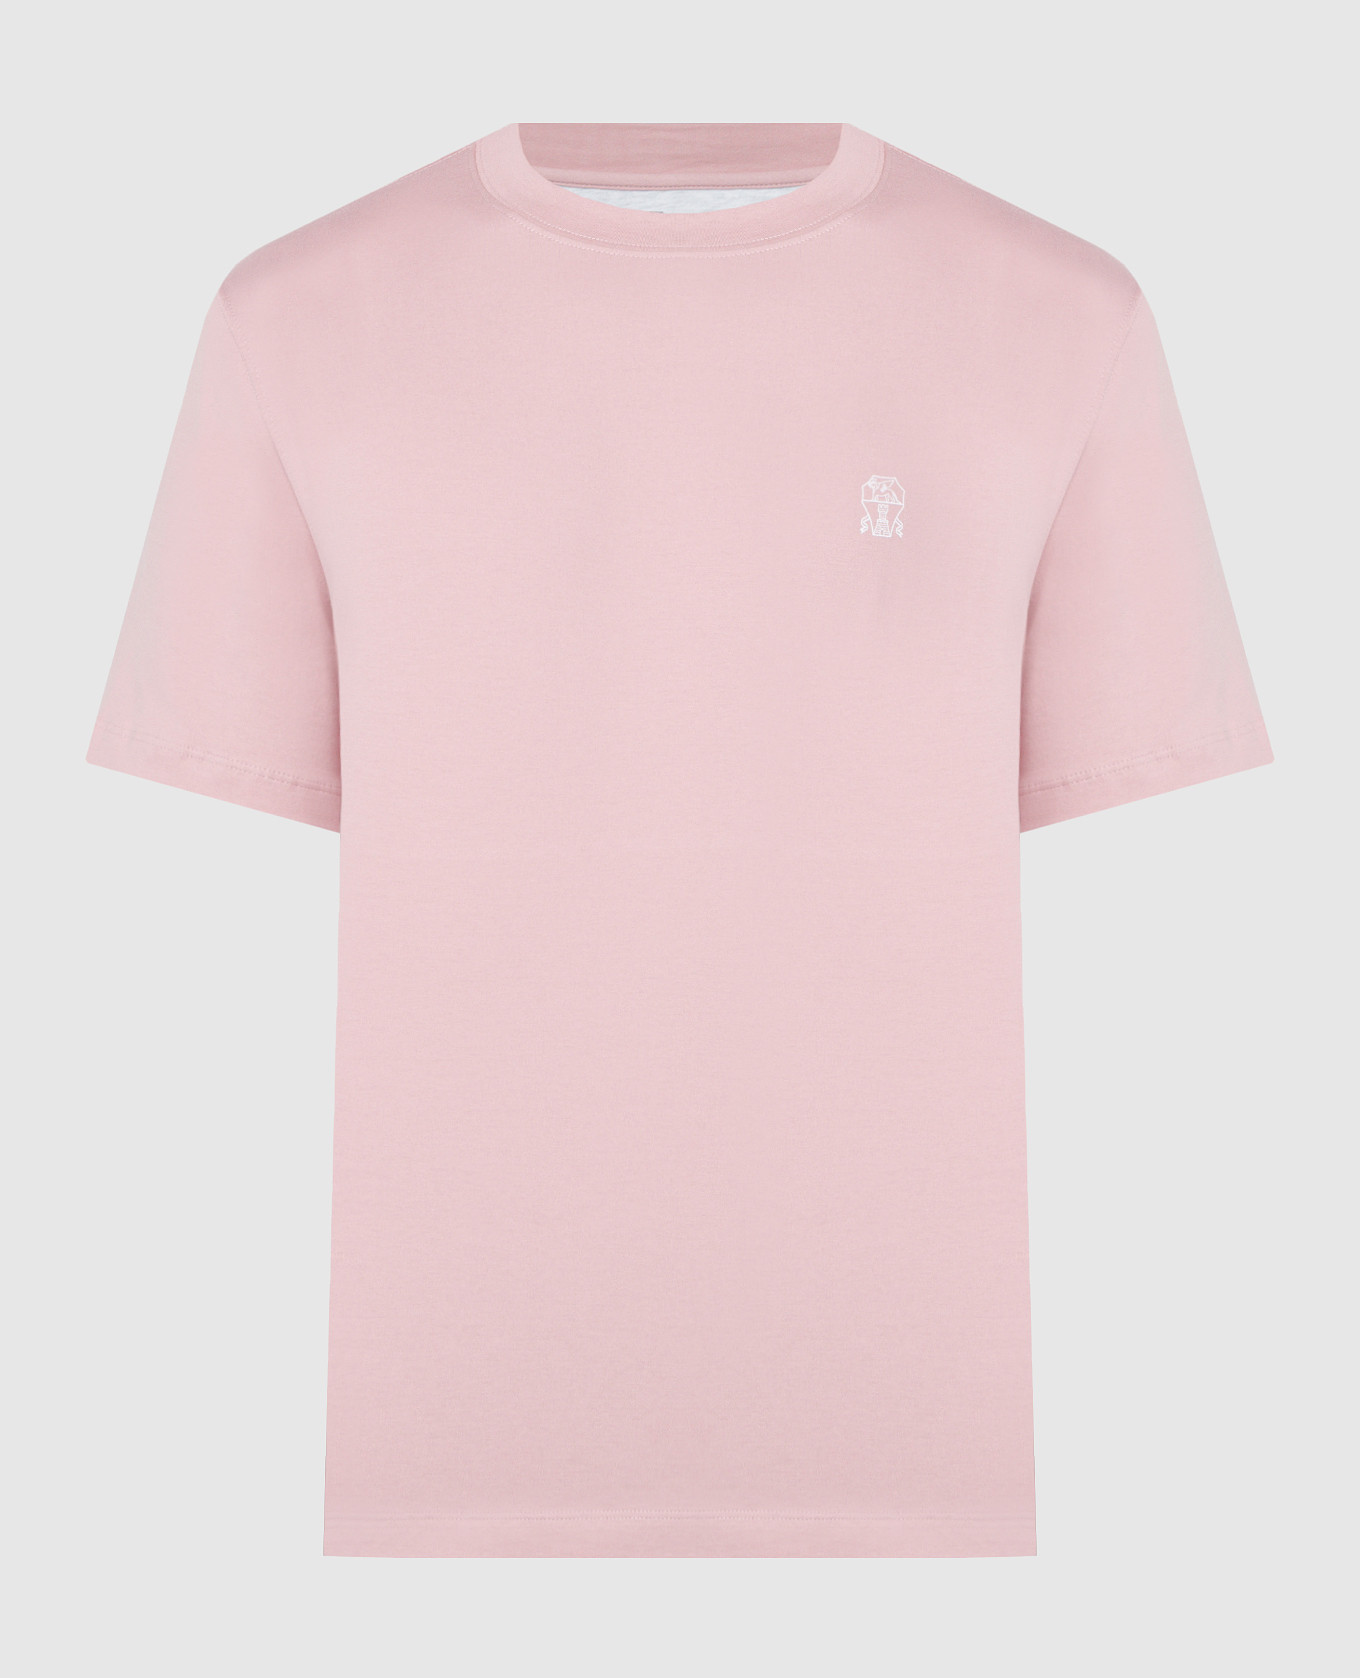 Pink t-shirt with logo emblem print